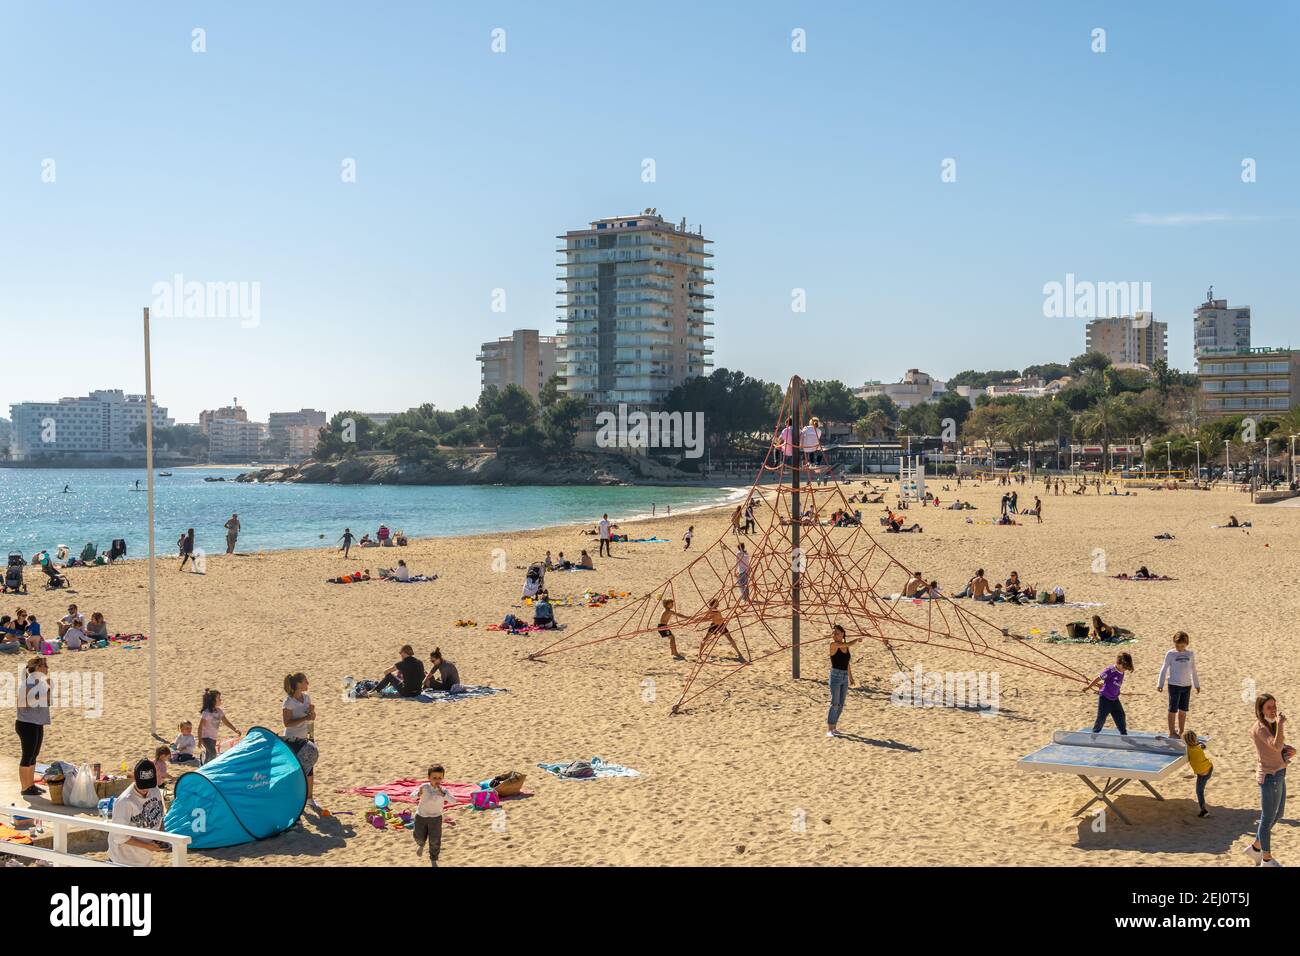 Palmanova, Spain; february 20 2021: general view of the marina and beach of the Mallorcan resort of Palmanova on a sunny day, with families enjoying t Stock Photo